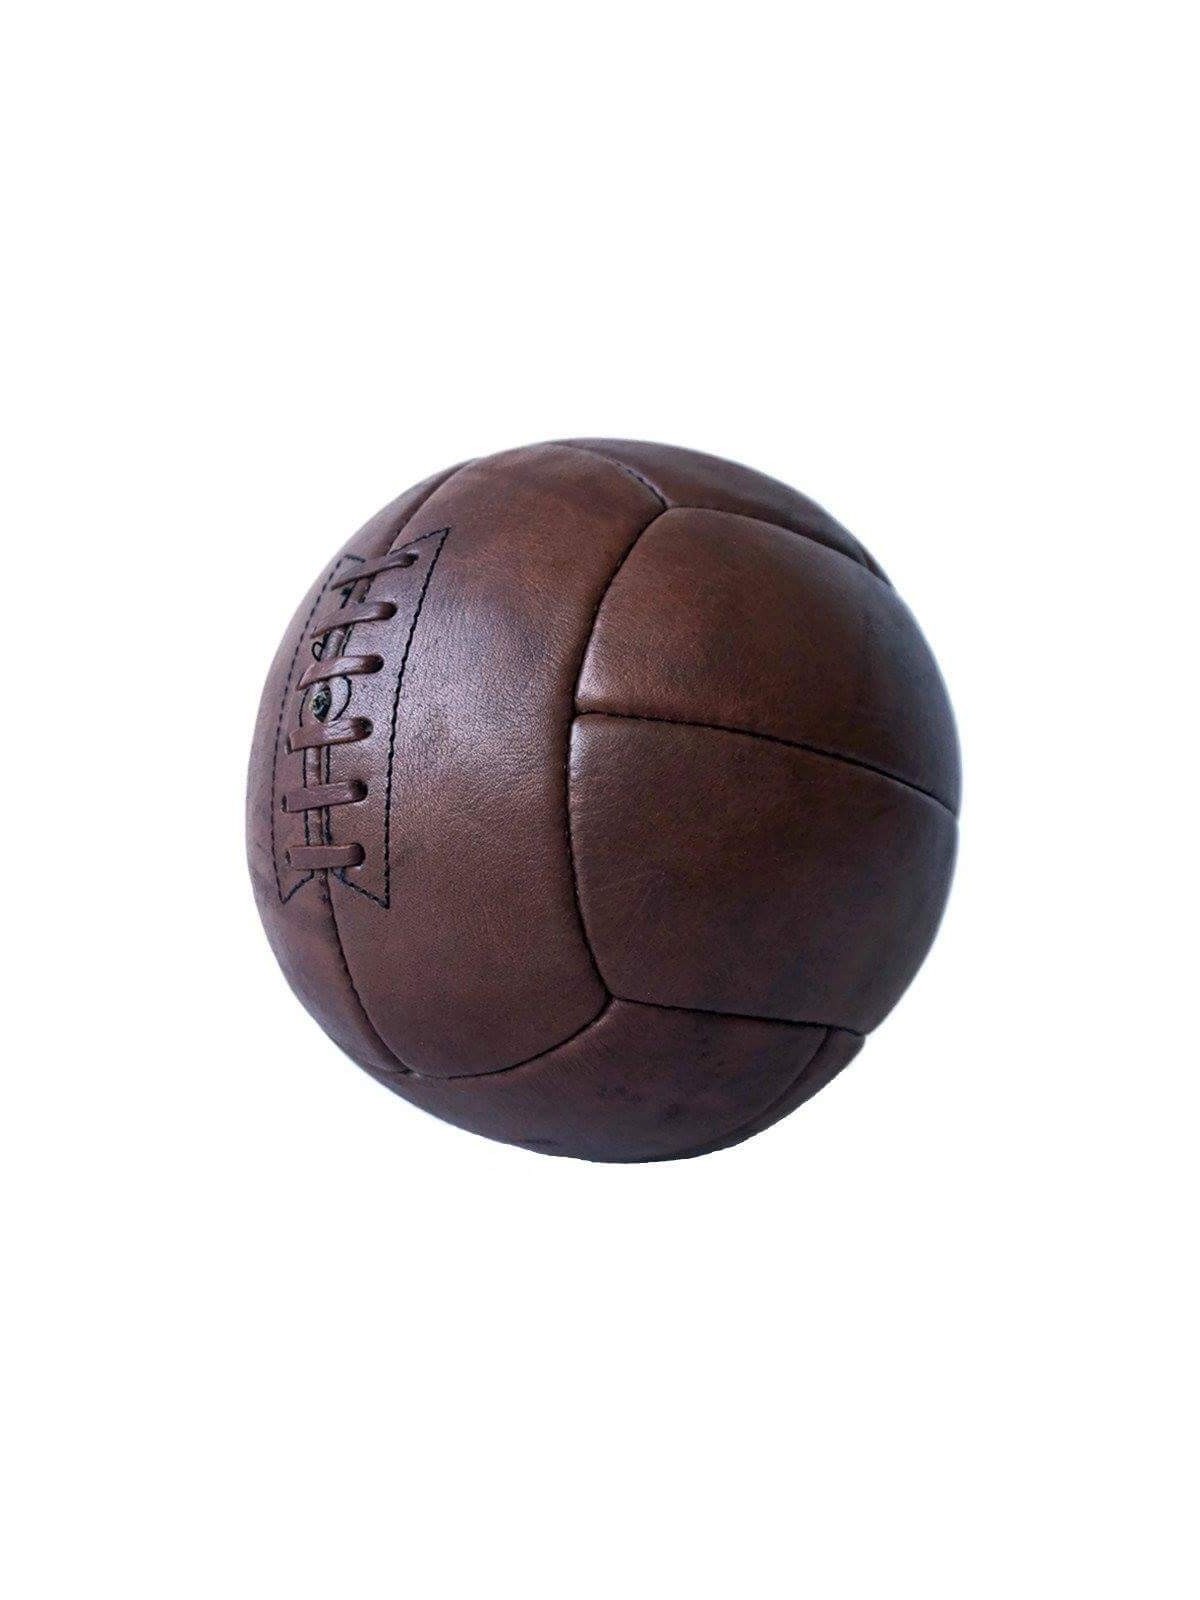 55-119 Ballon de football Old School Leather personnalisé